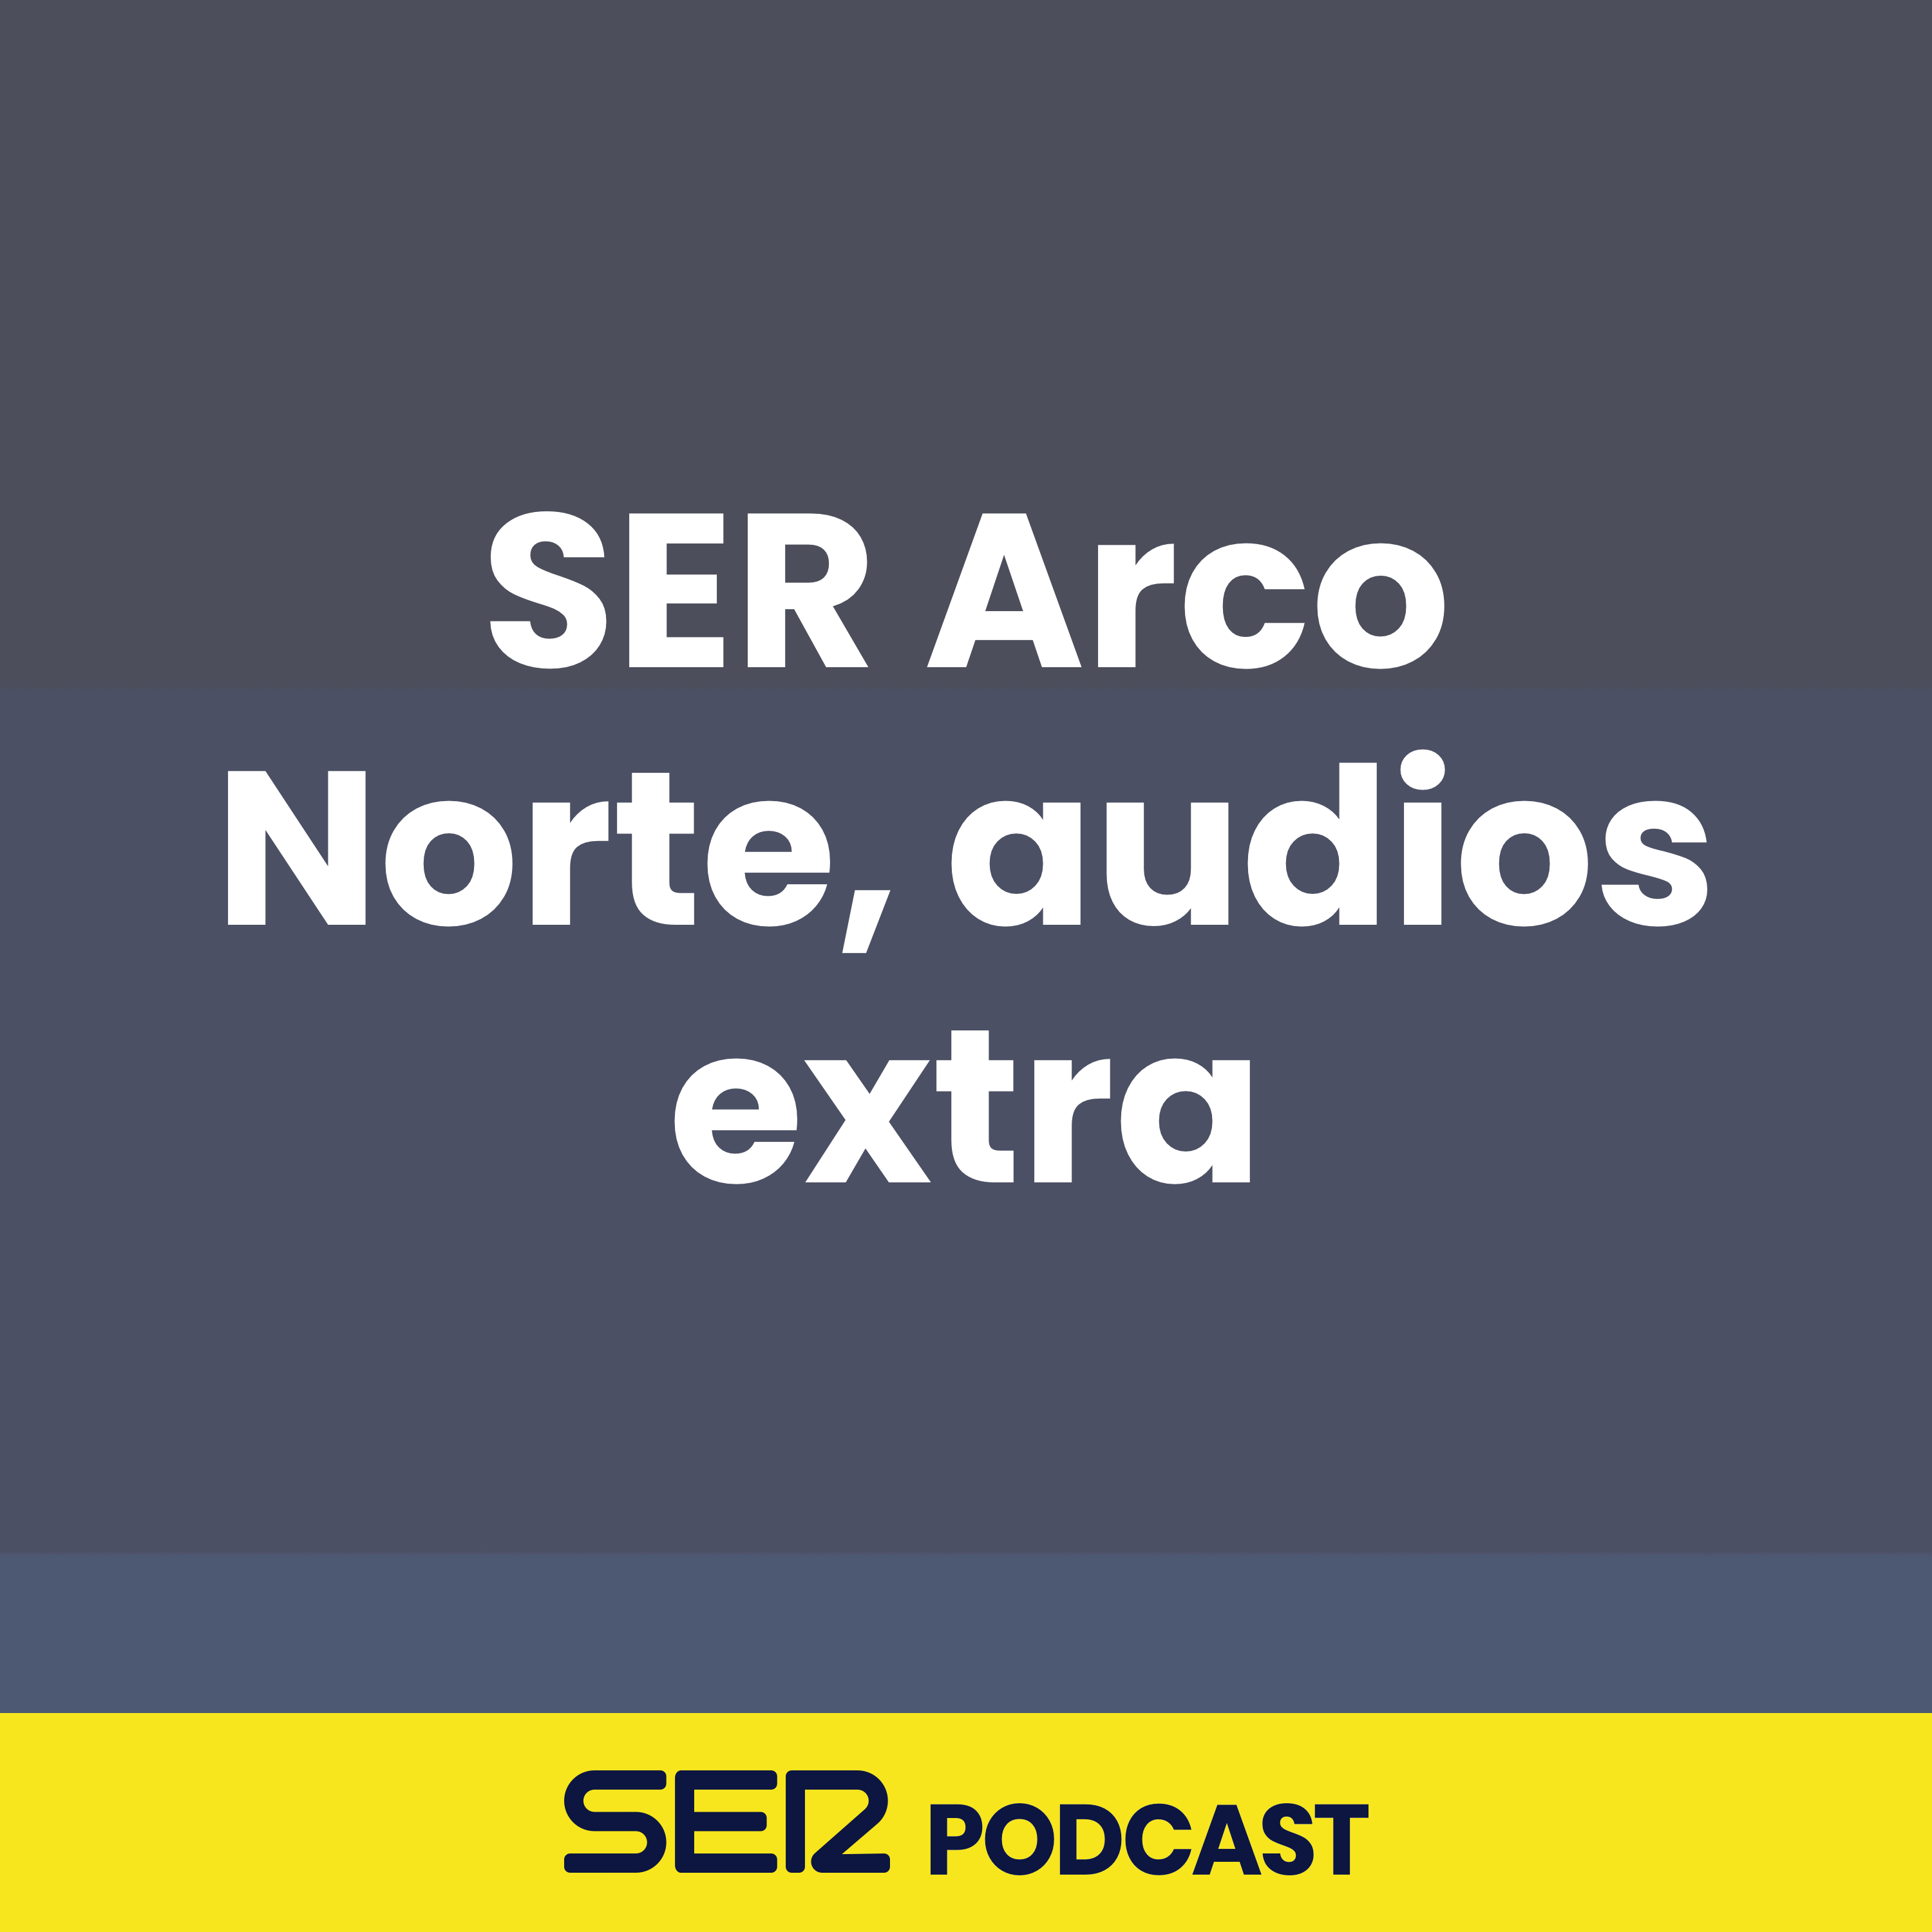 SER Arco Norte, audios extra